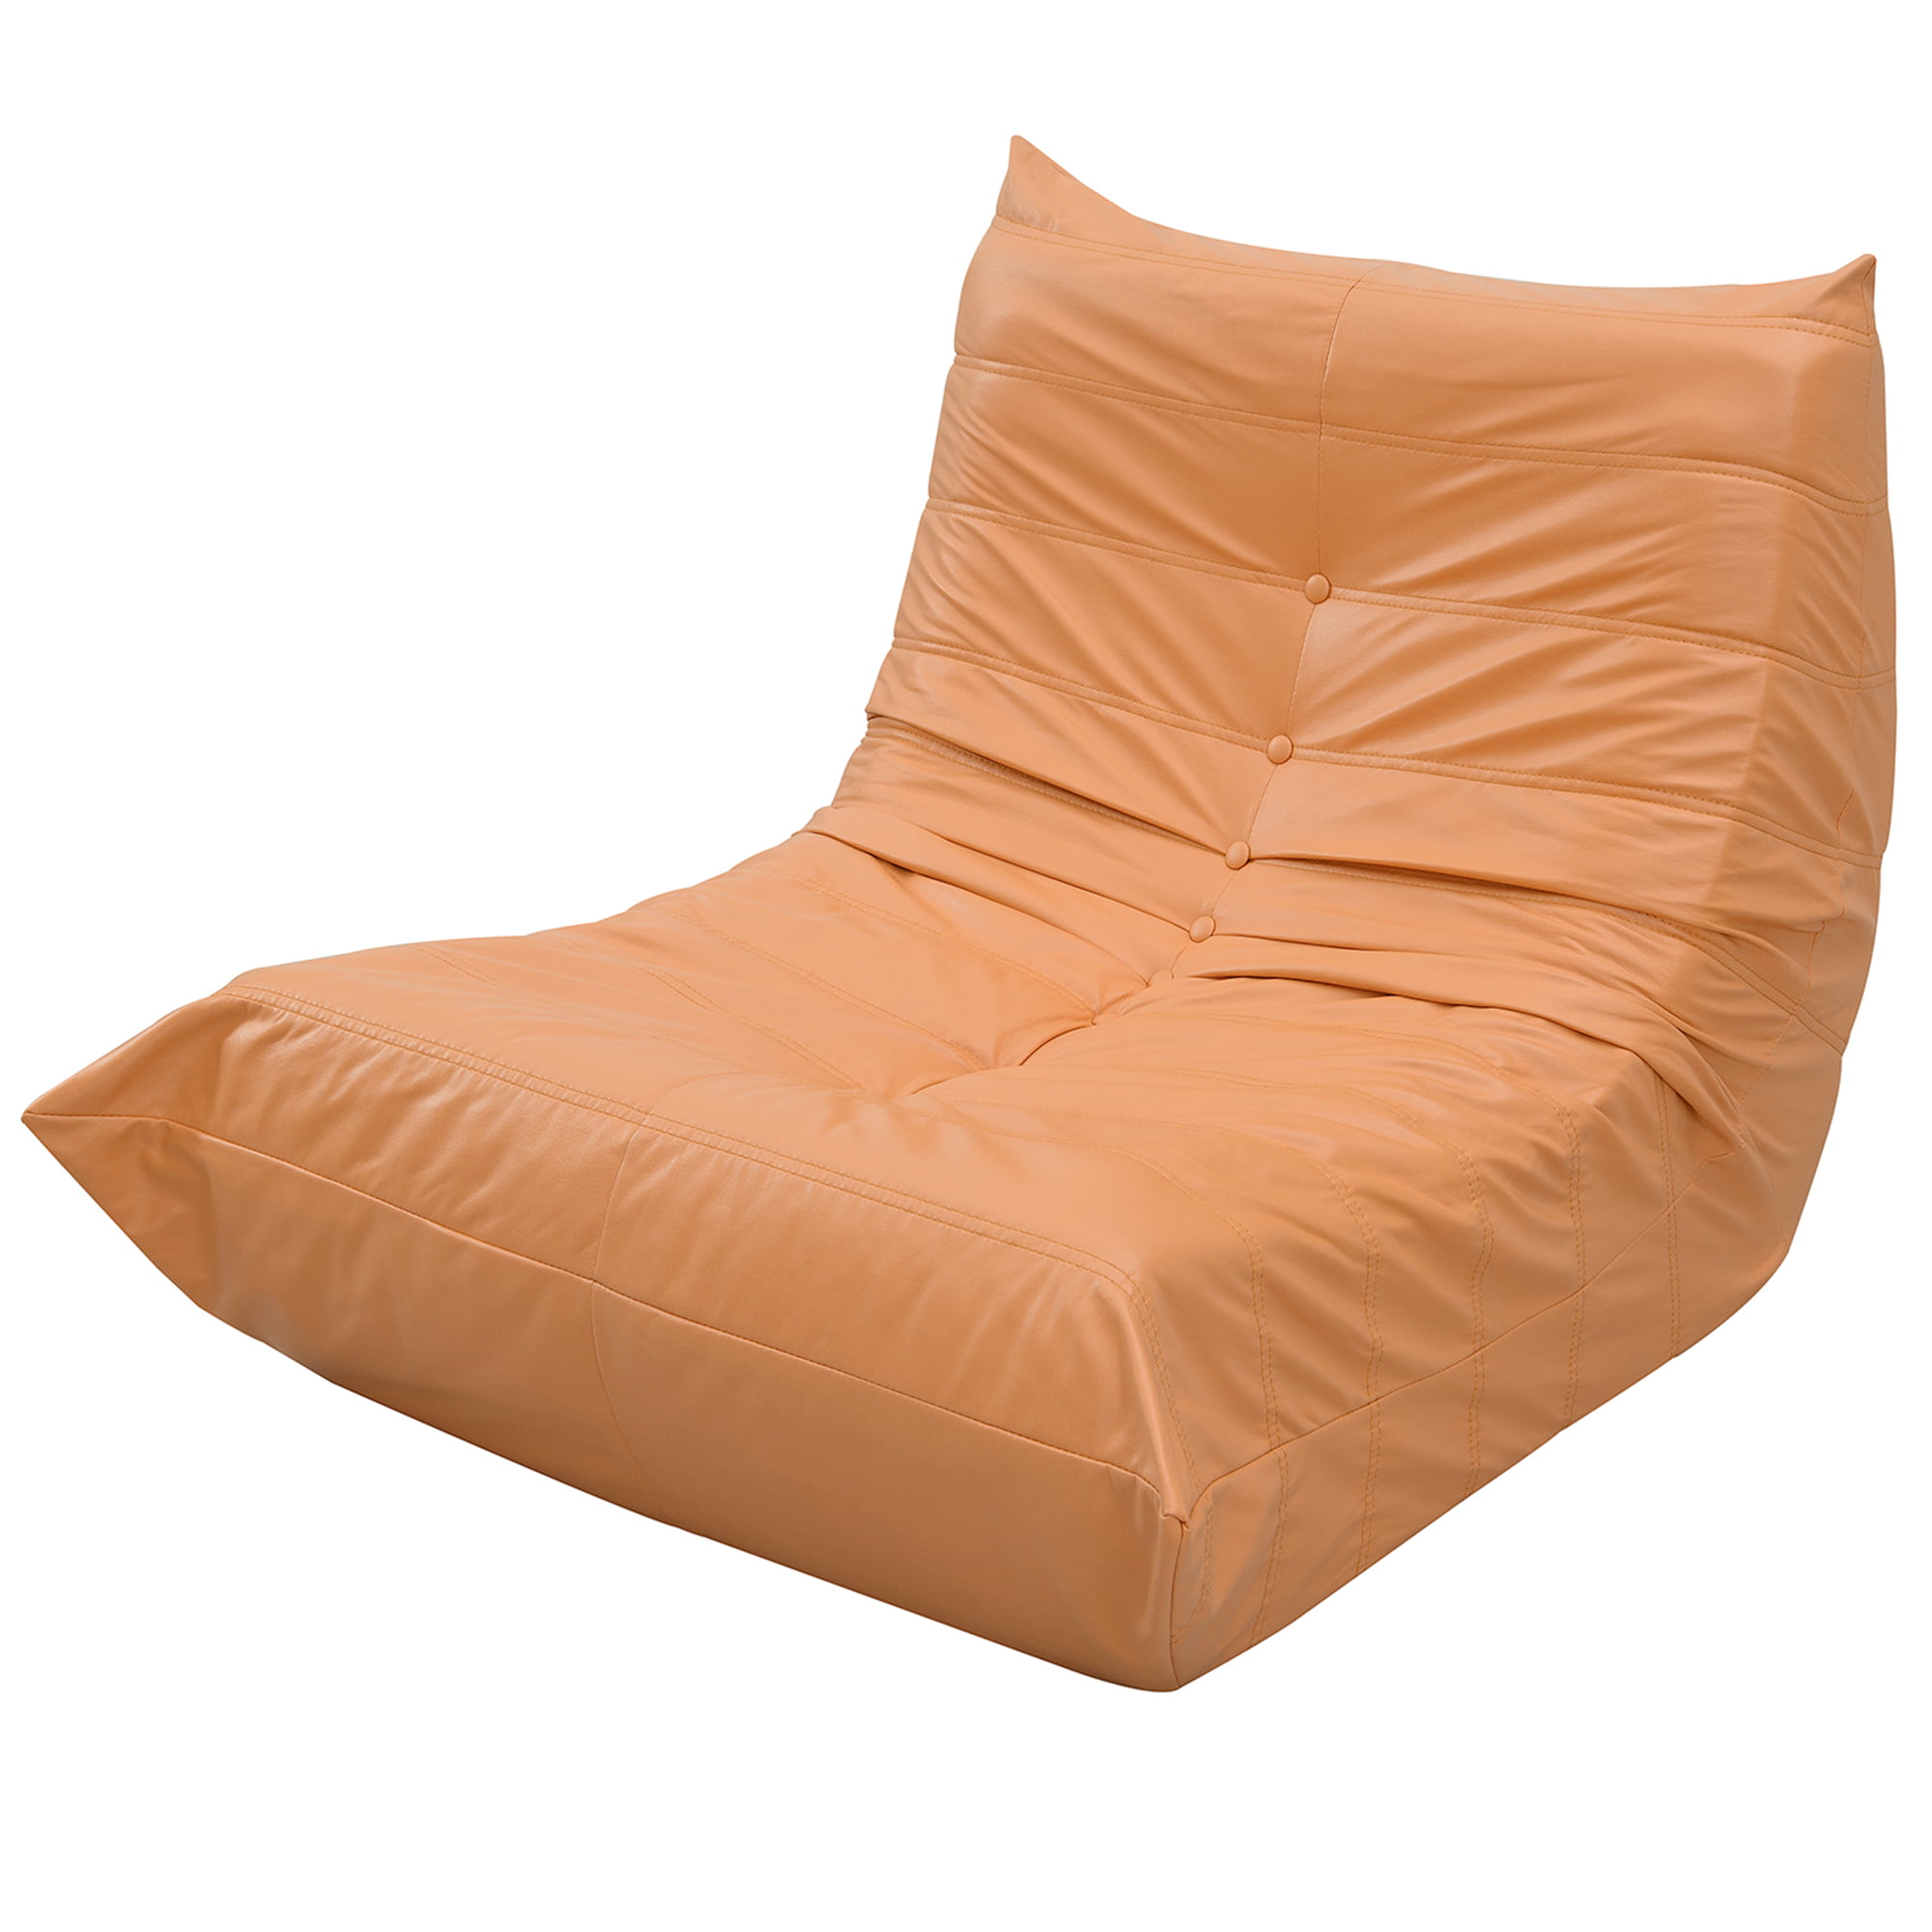 Comfy Oversized Lazy Sofa - WF304974AAG